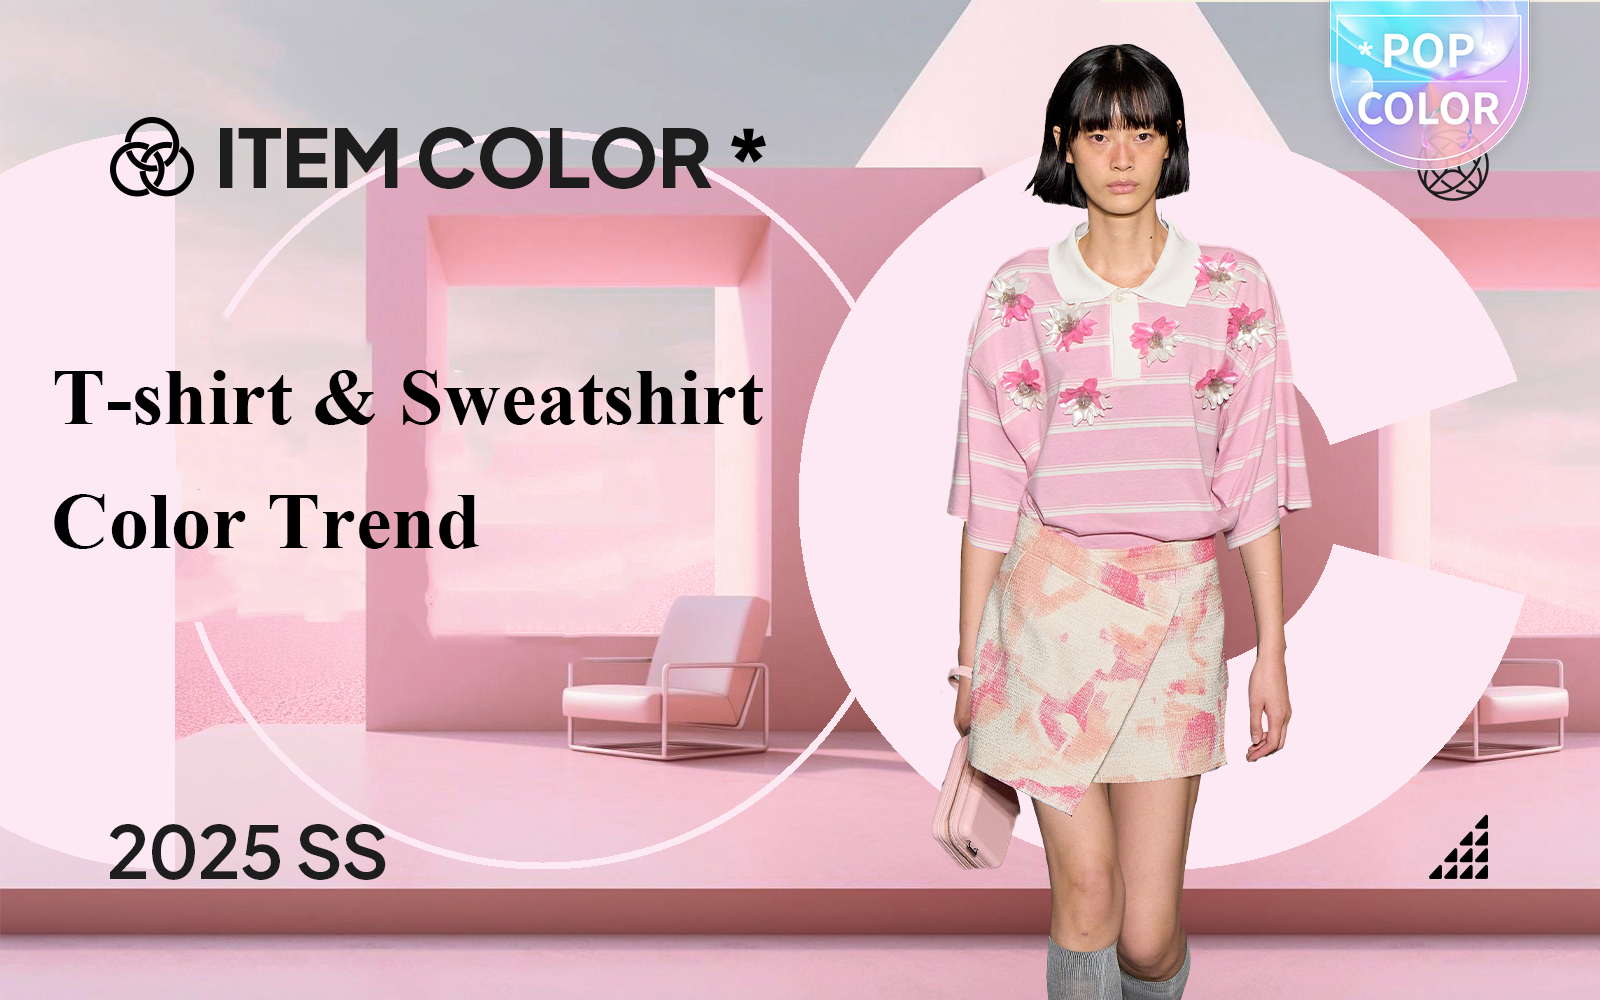 Soft Pales -- The Color Trend for Women's T-shirt & Sweatshirt